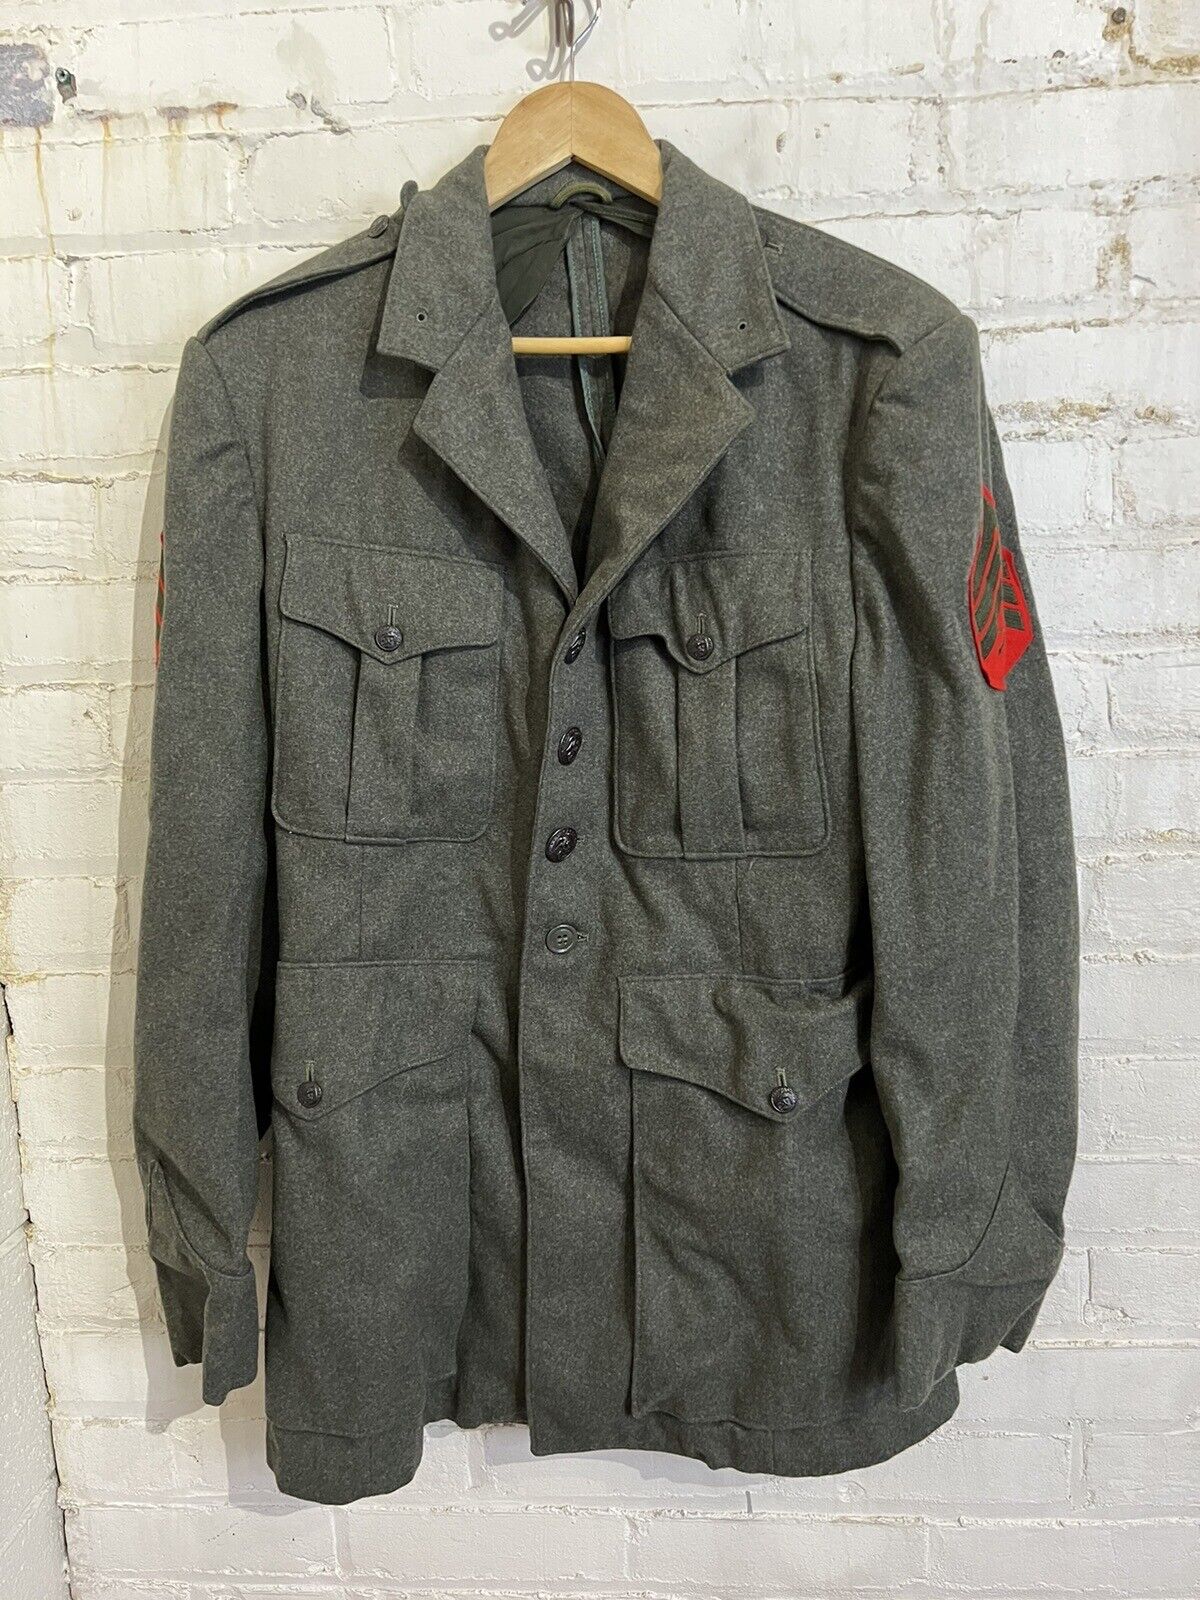 vintage korean war era wool jacket distressed patches vtg military us